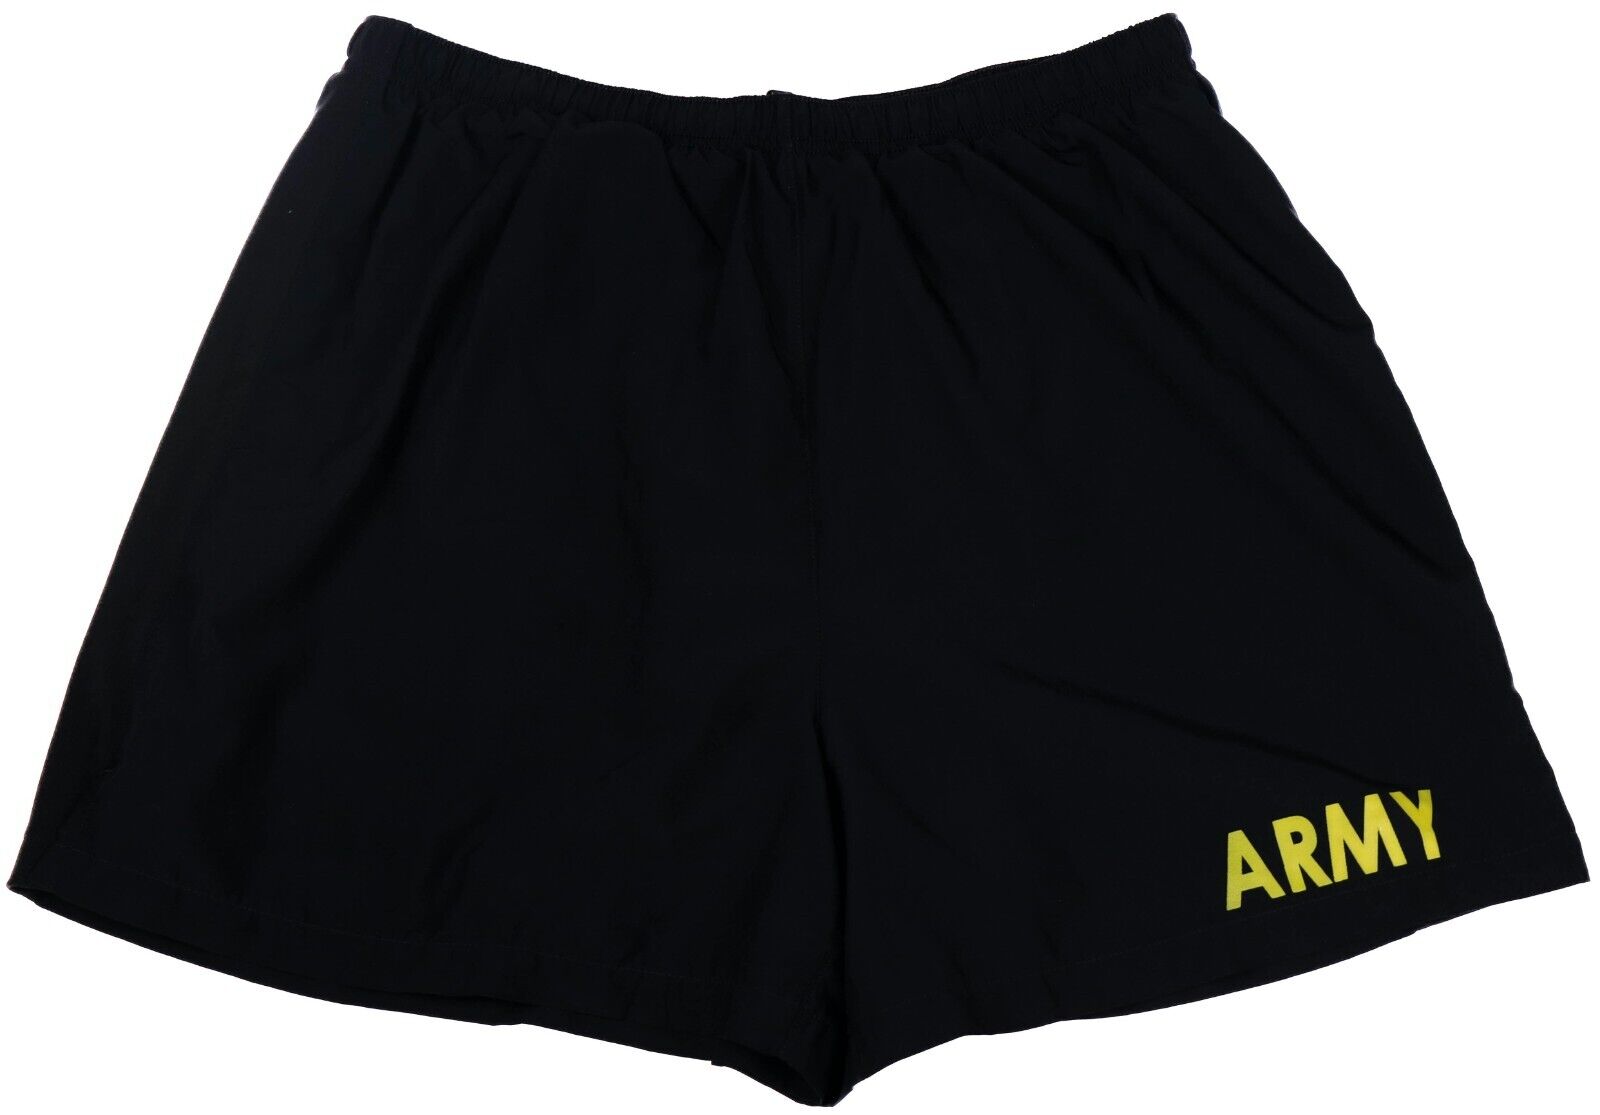 NEW MEDIUM - Men's APFU Shorts Army Black Gold PT Physical Fitness Shorts Trunks